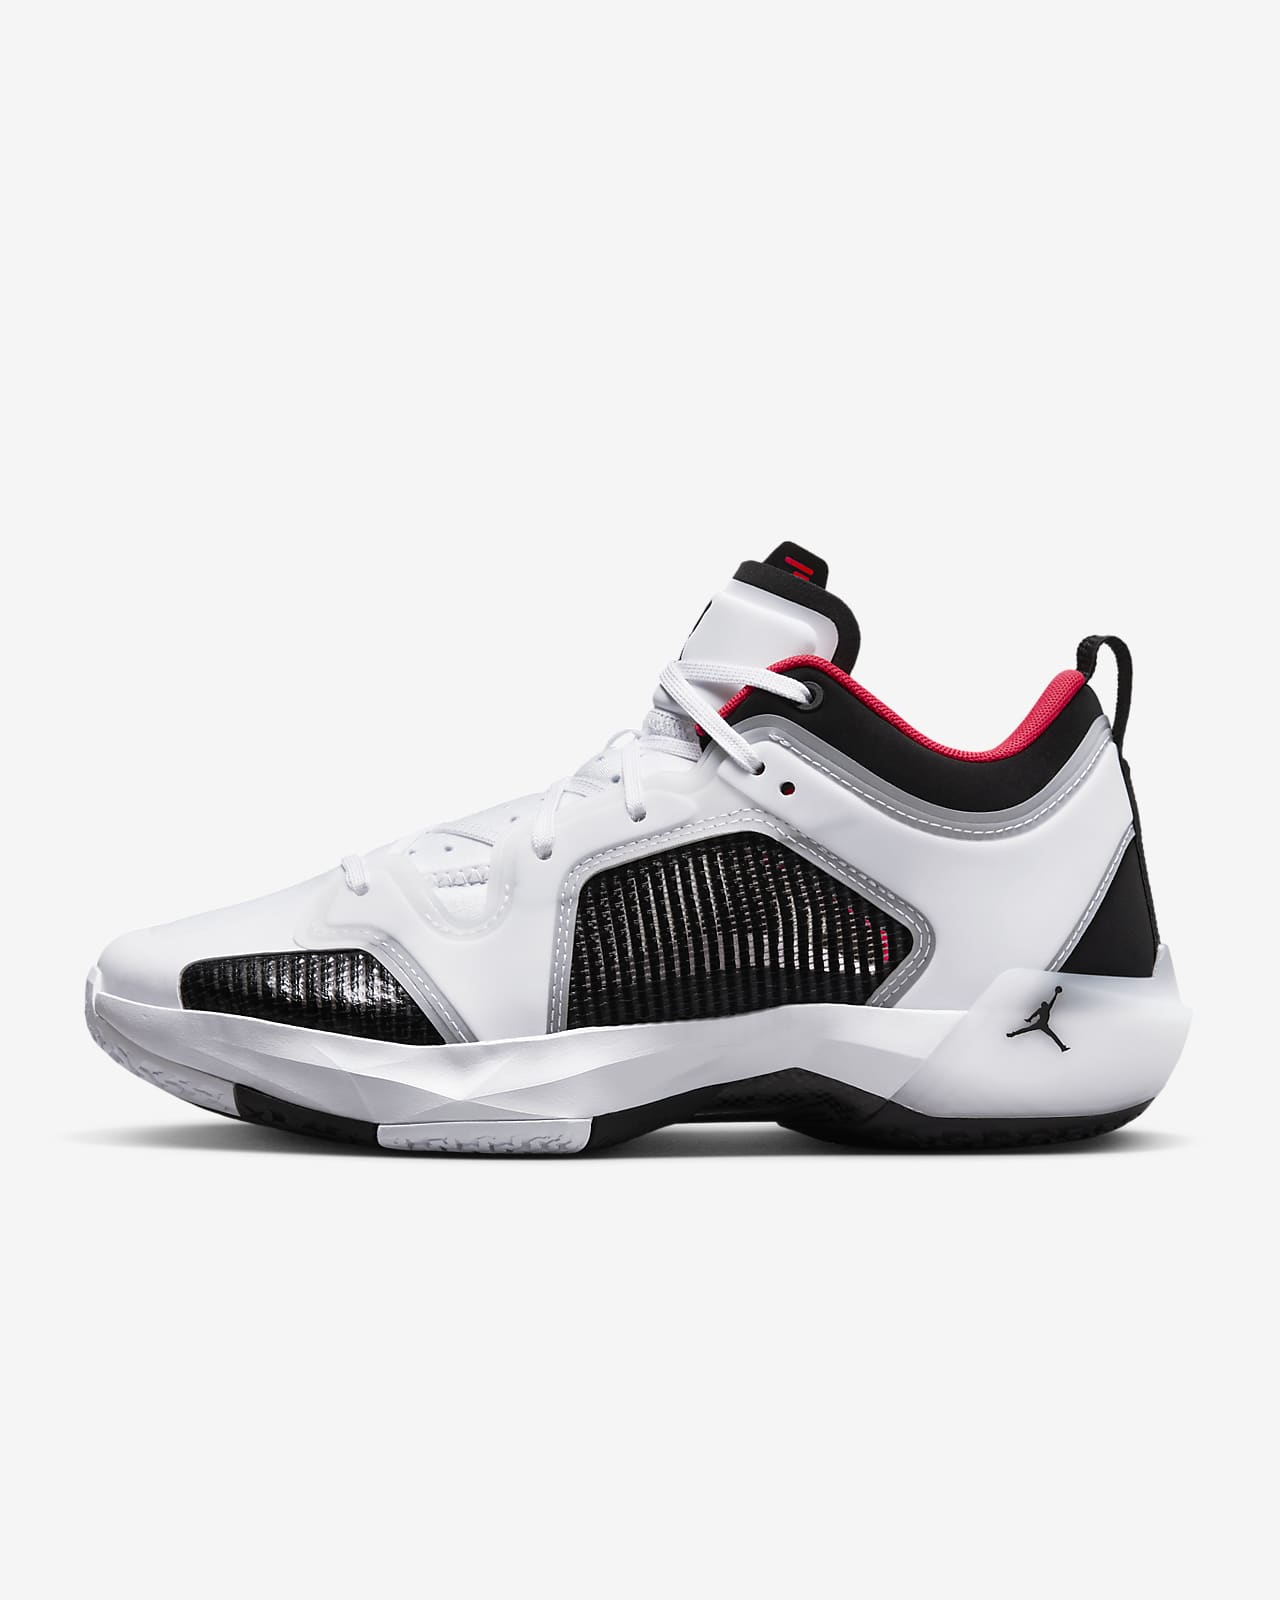 Air Jordan XXXVII Low PF Men's Basketball Shoes